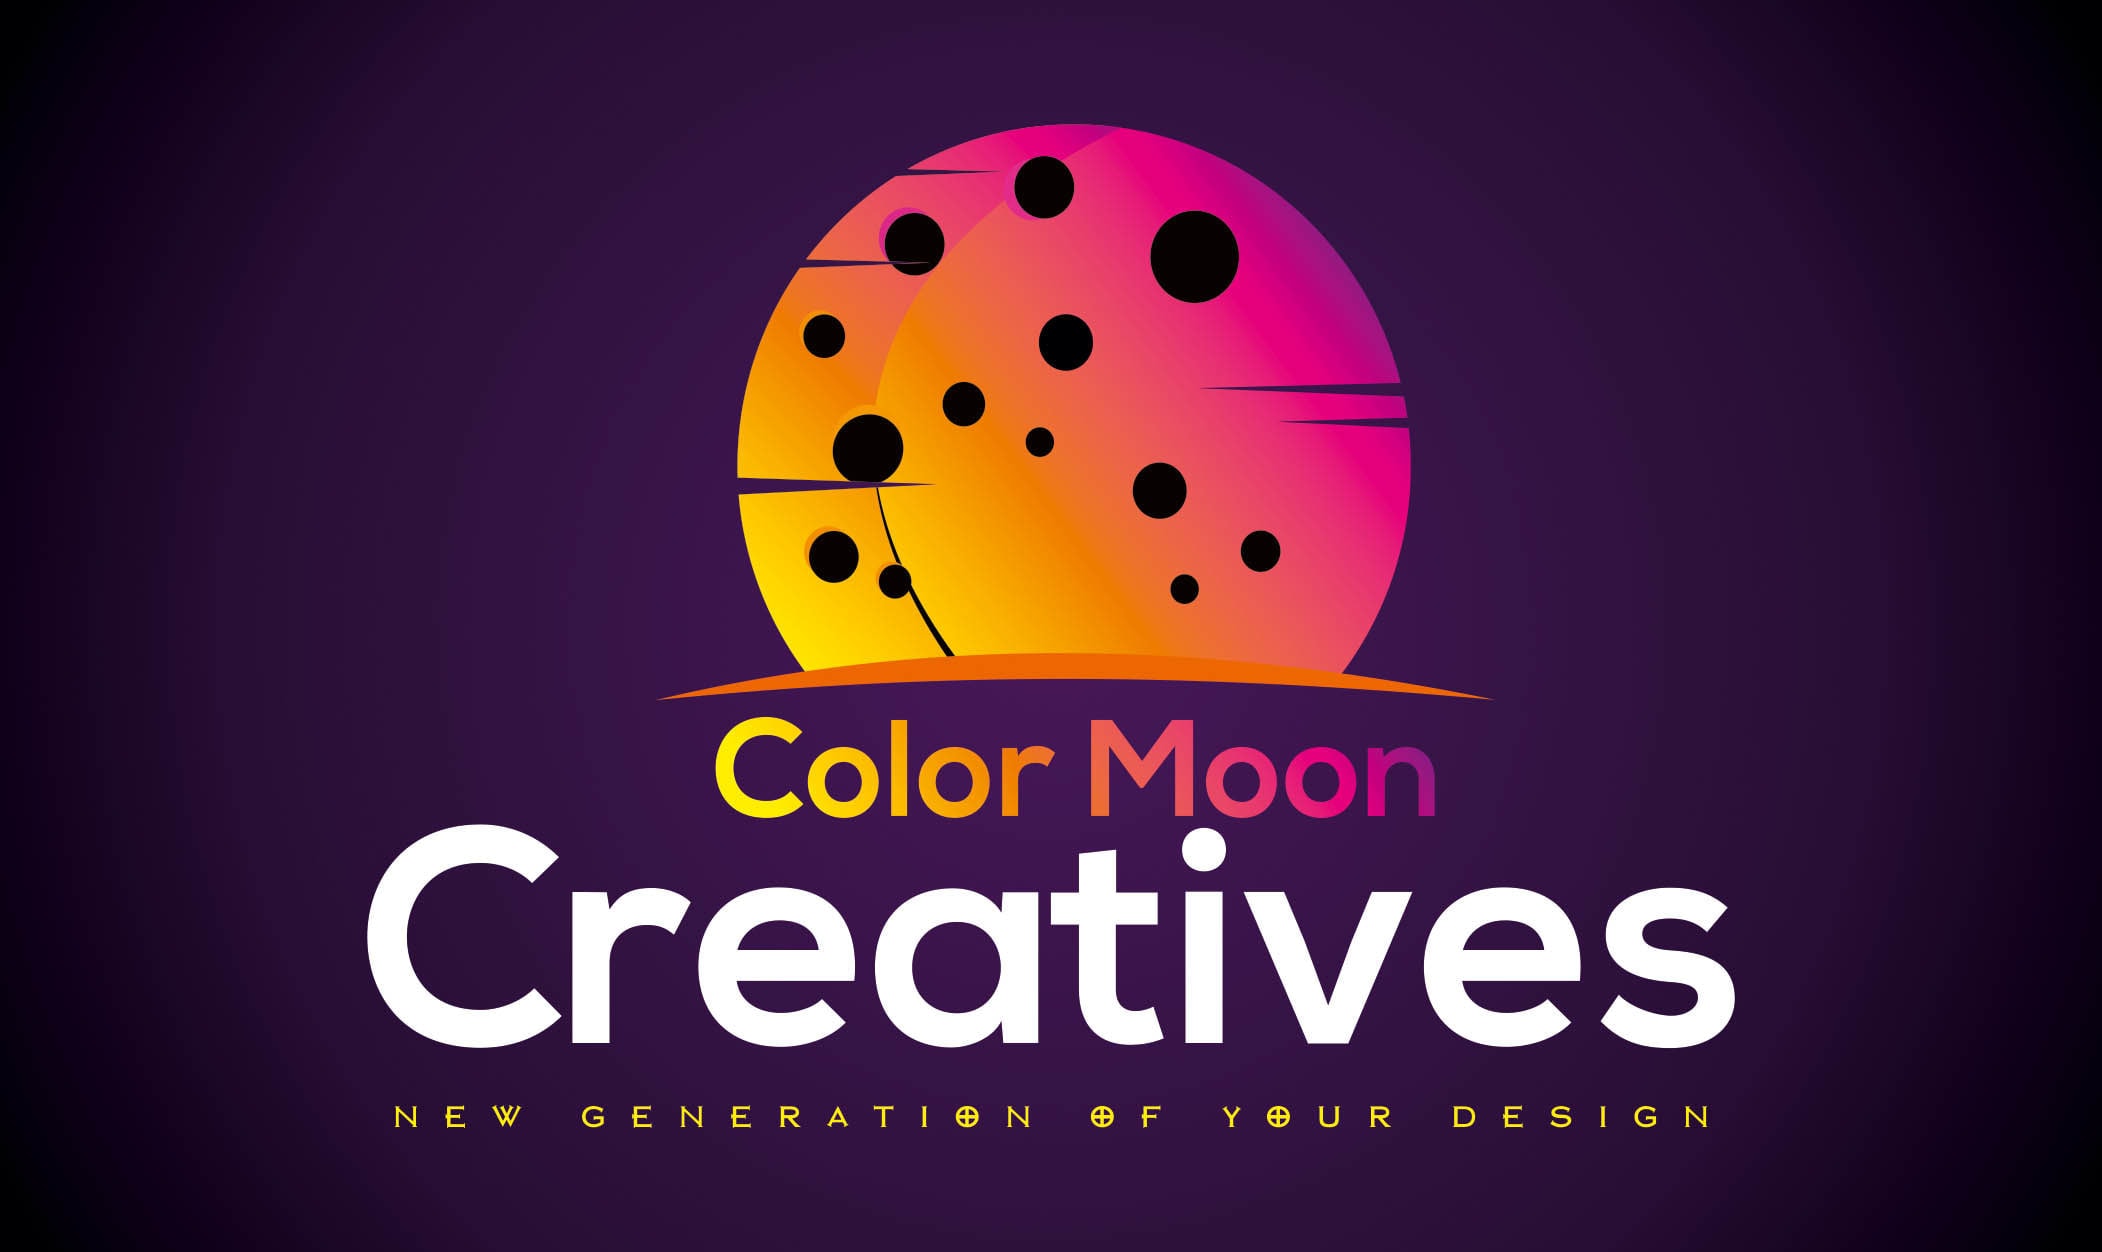 Color Moon Creatives